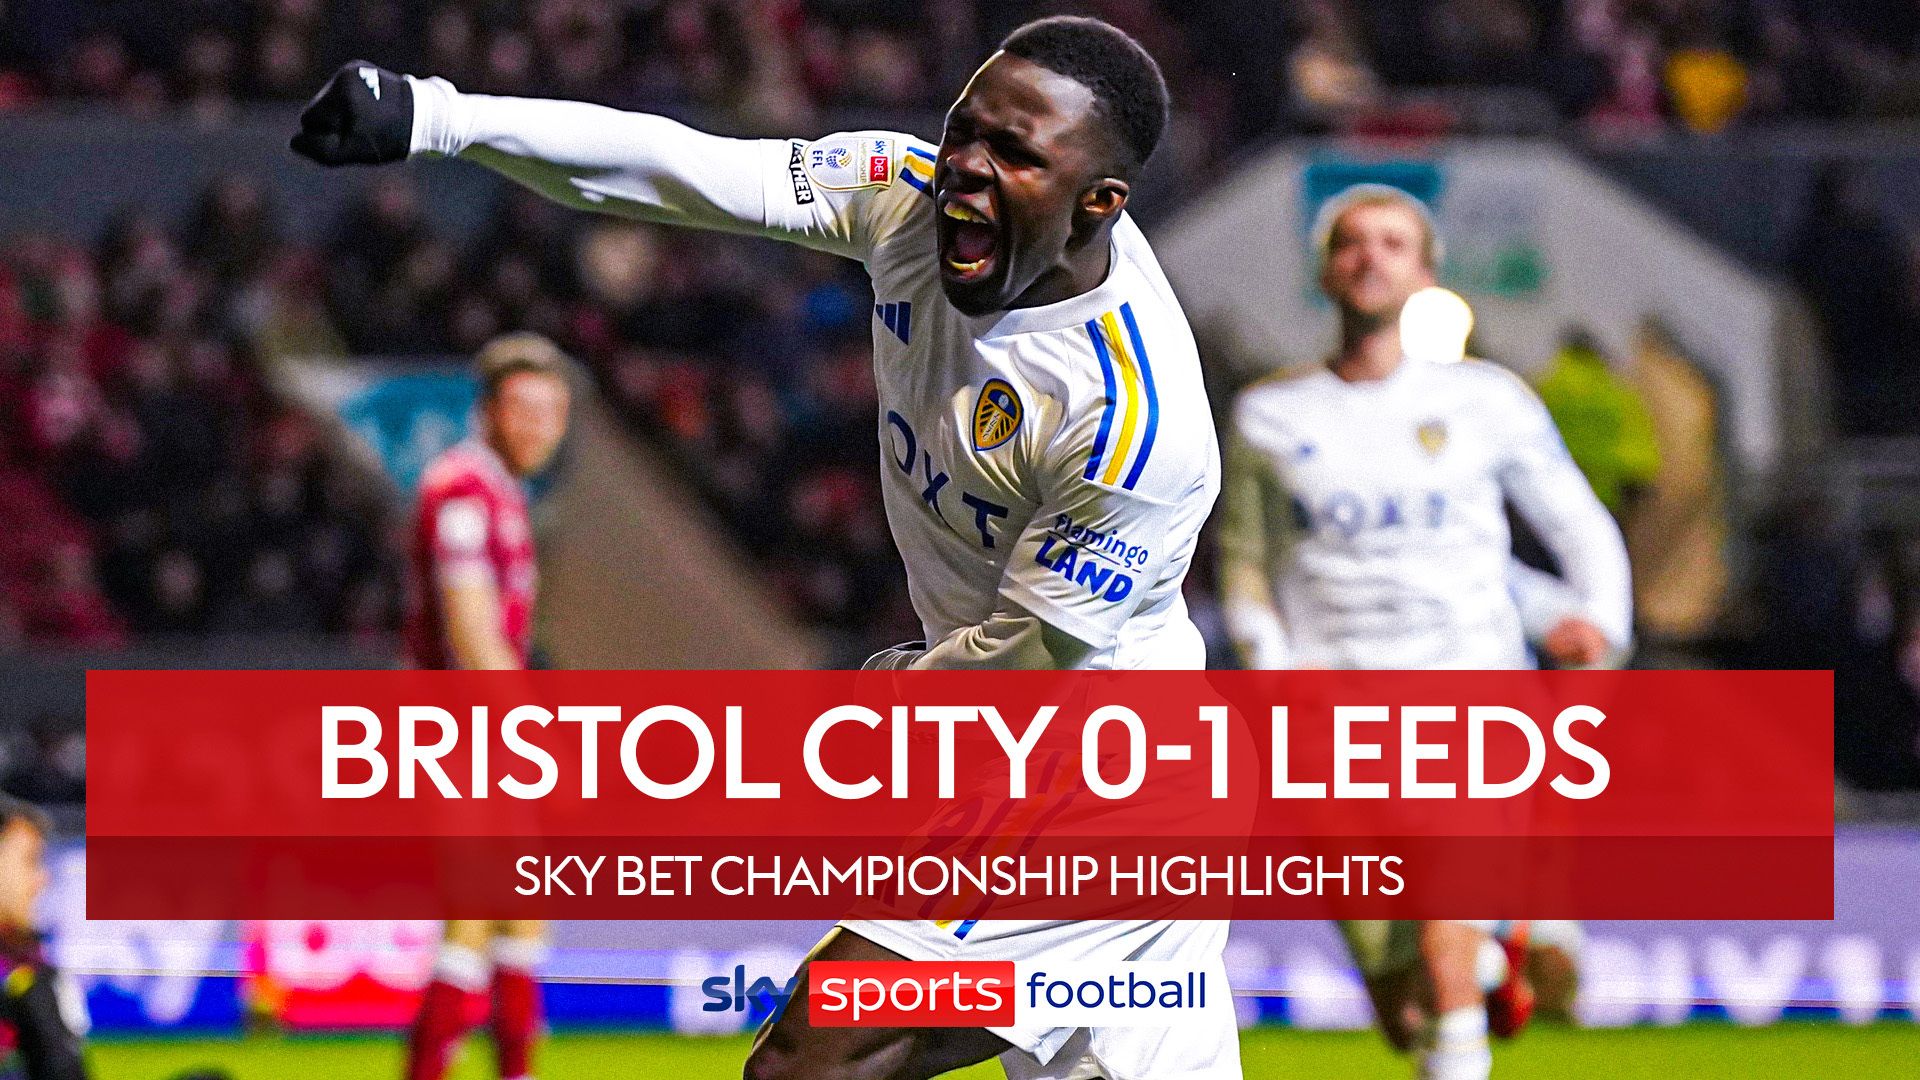 Bristol City 0-1 Leeds